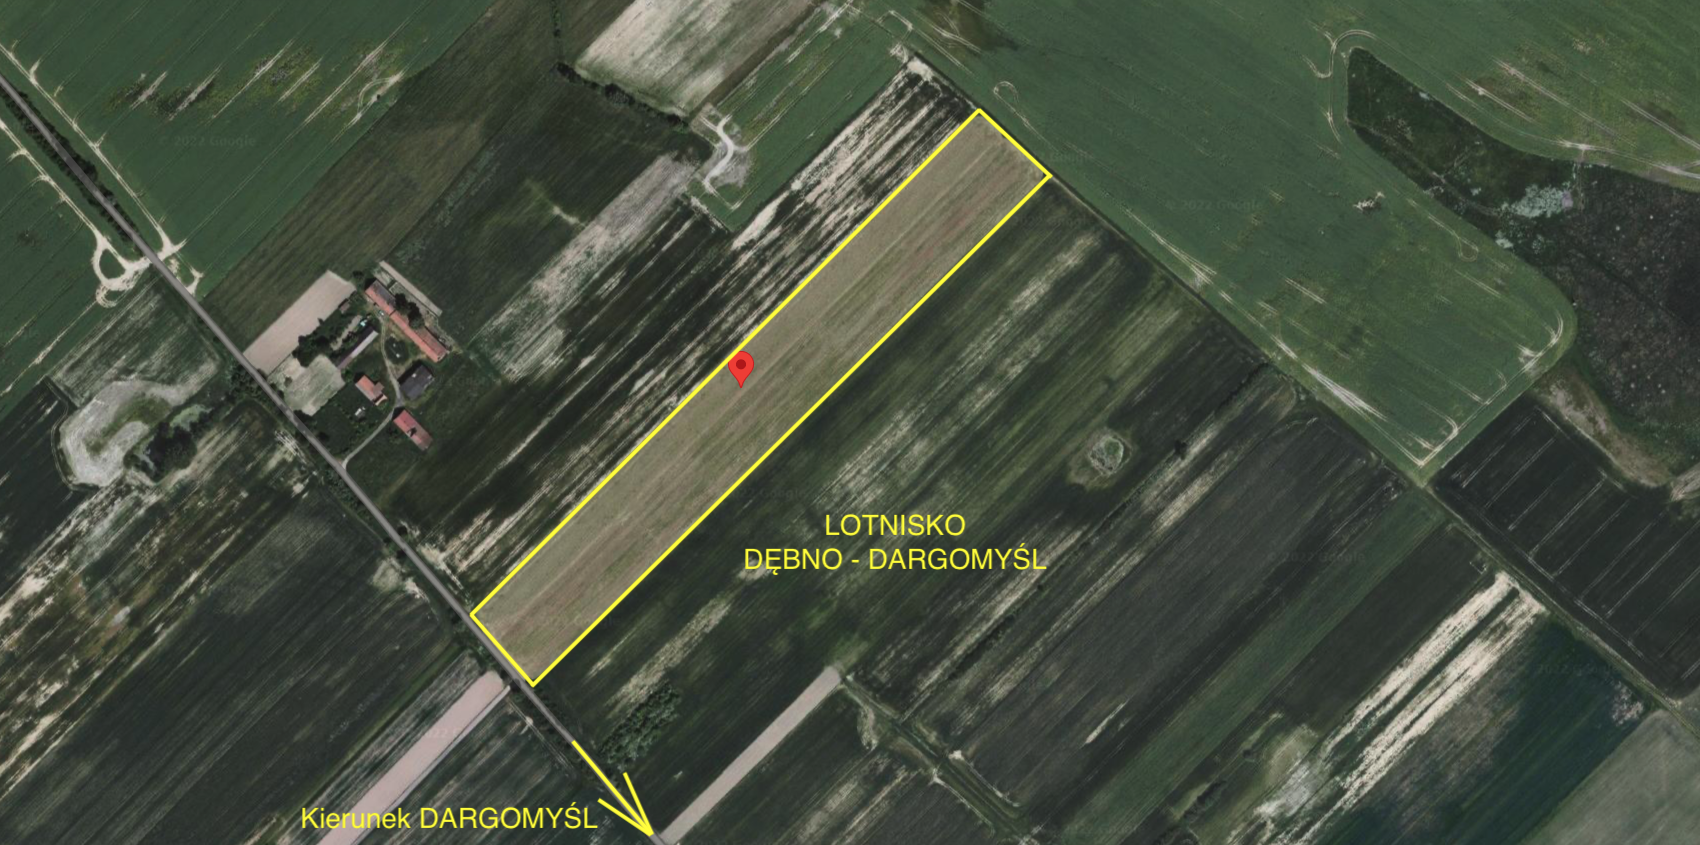 Dębno-Dargomyśl landing field. 2022. The work by Karol Placha Hetman